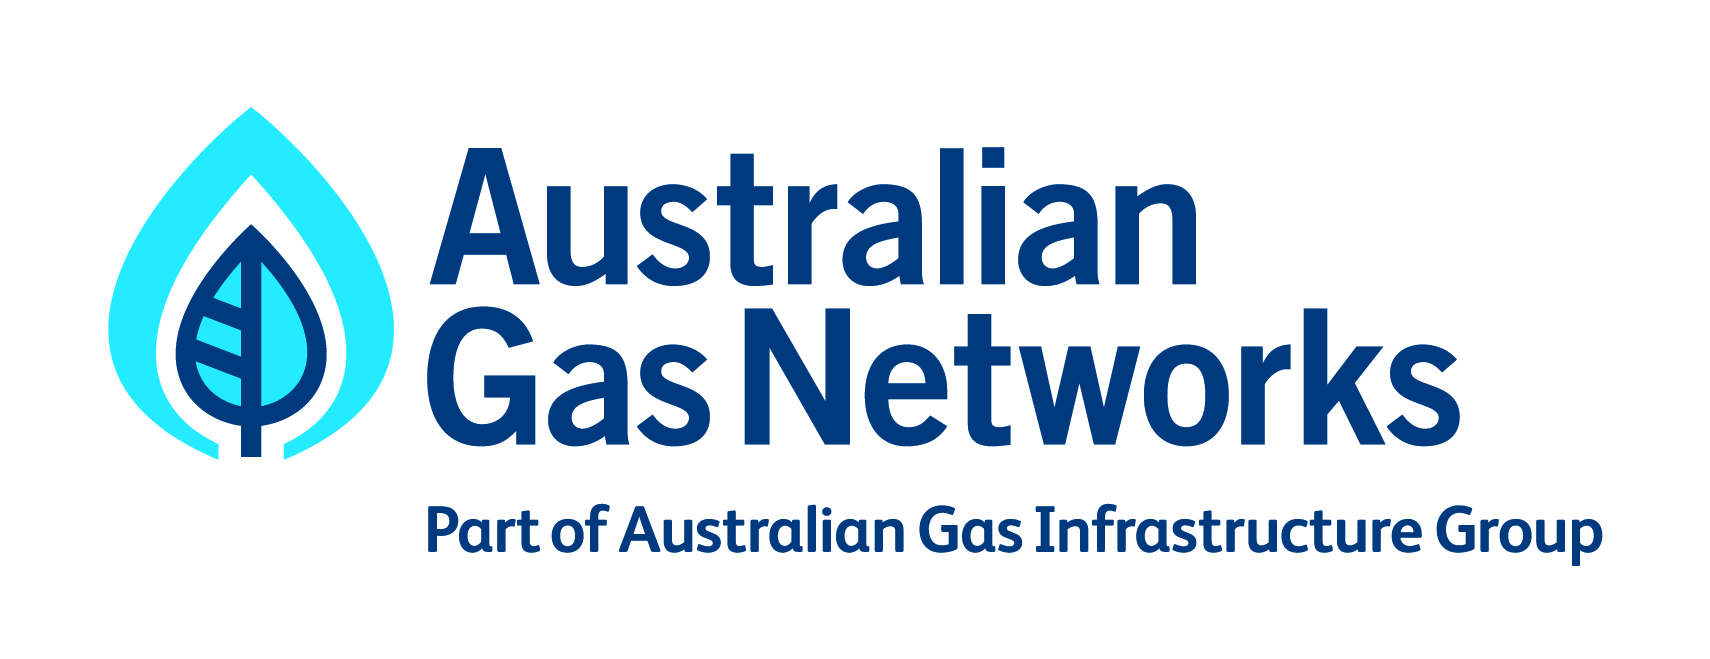 Australian Gas Infrastructure Group